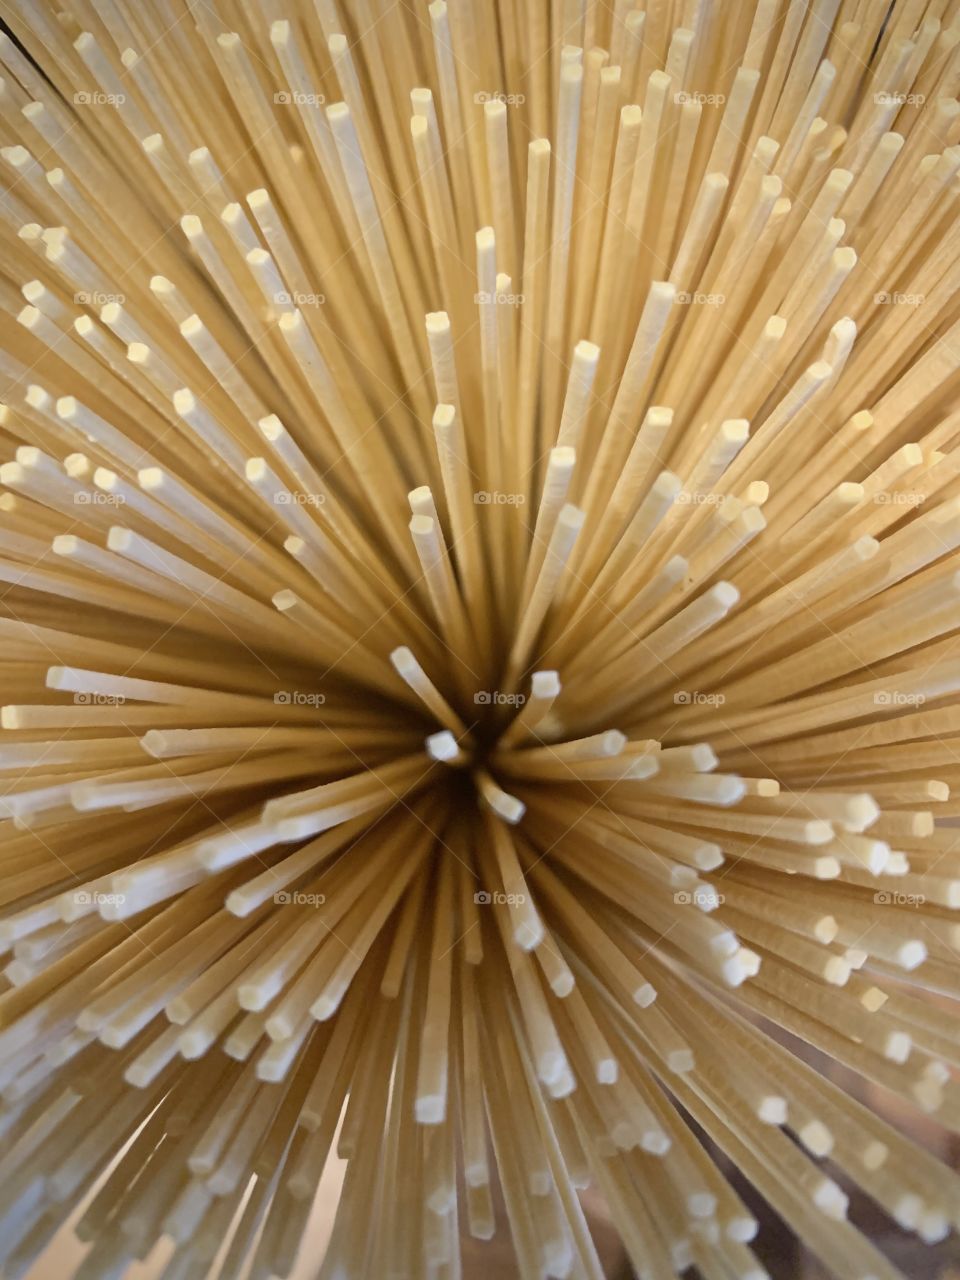 Dry udon noodles